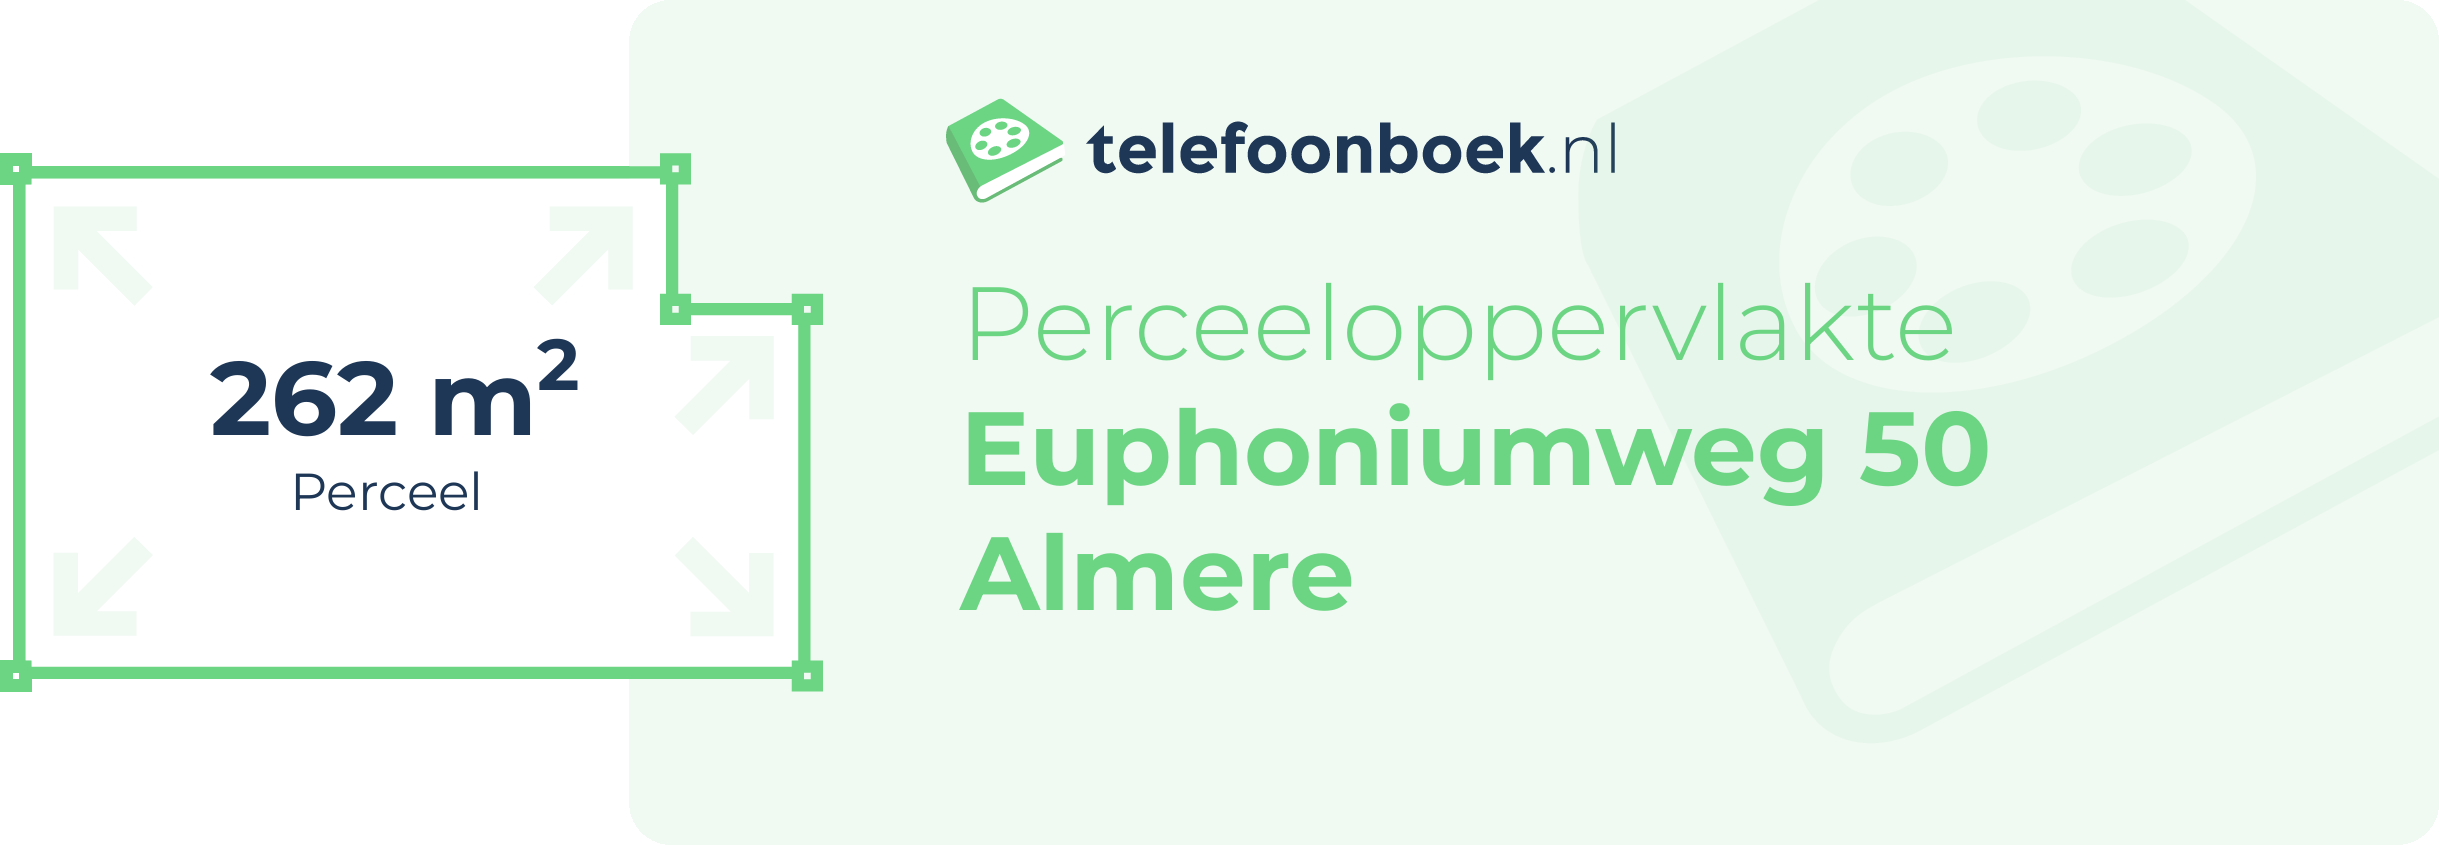 Perceeloppervlakte Euphoniumweg 50 Almere